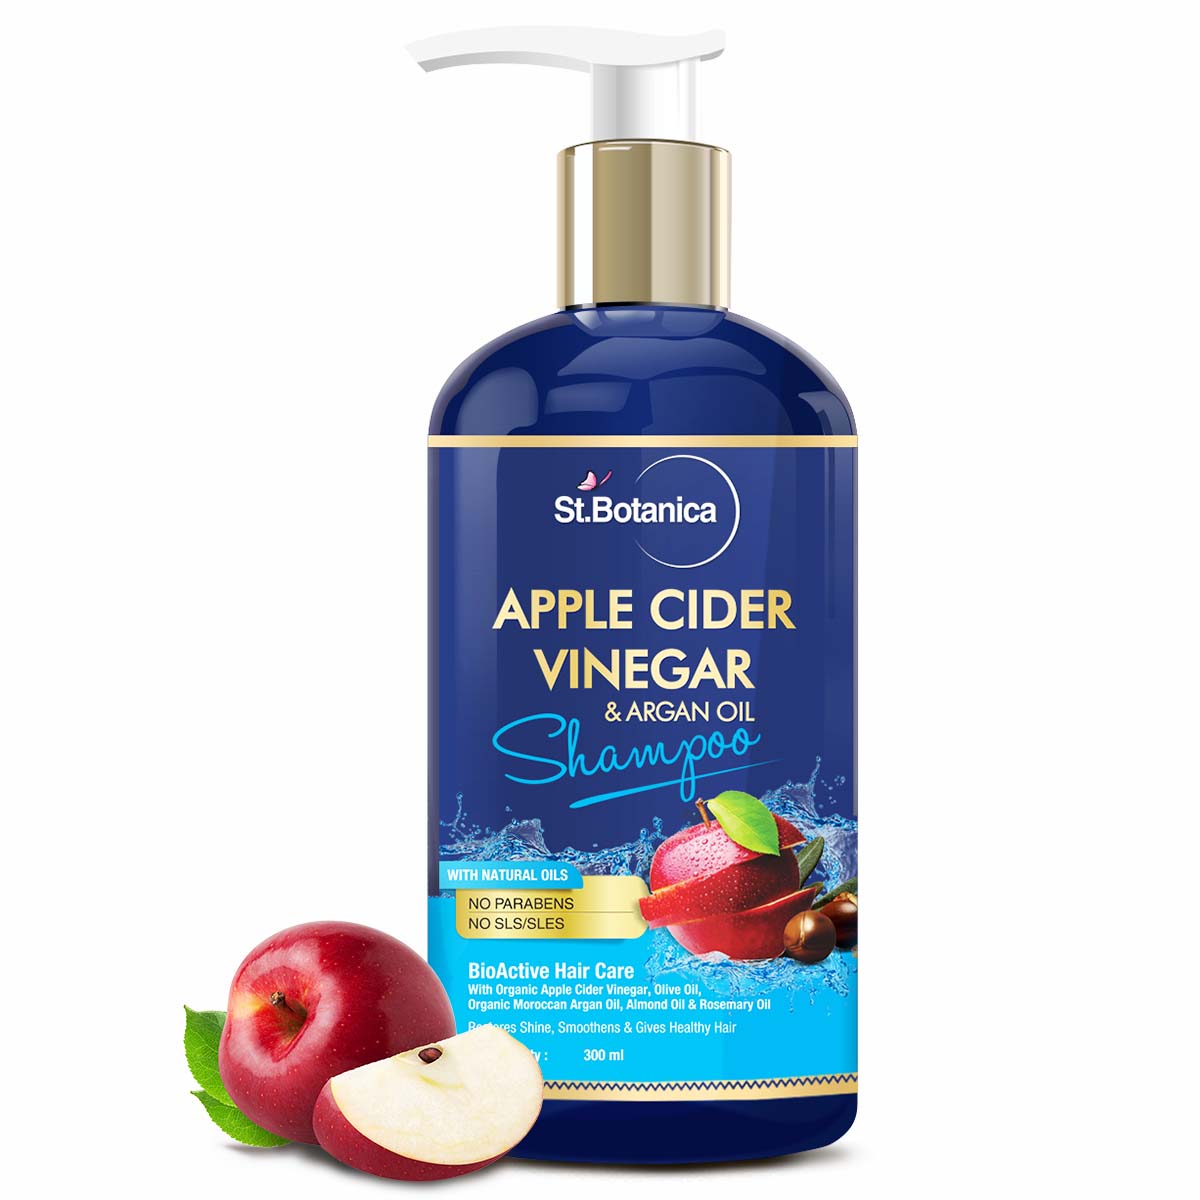 St.Botanica Apple Cider Vinegar & Organic Argan Oil Hair Shampoo - 300ml - No Sulphate, No Parabens, No Silicon